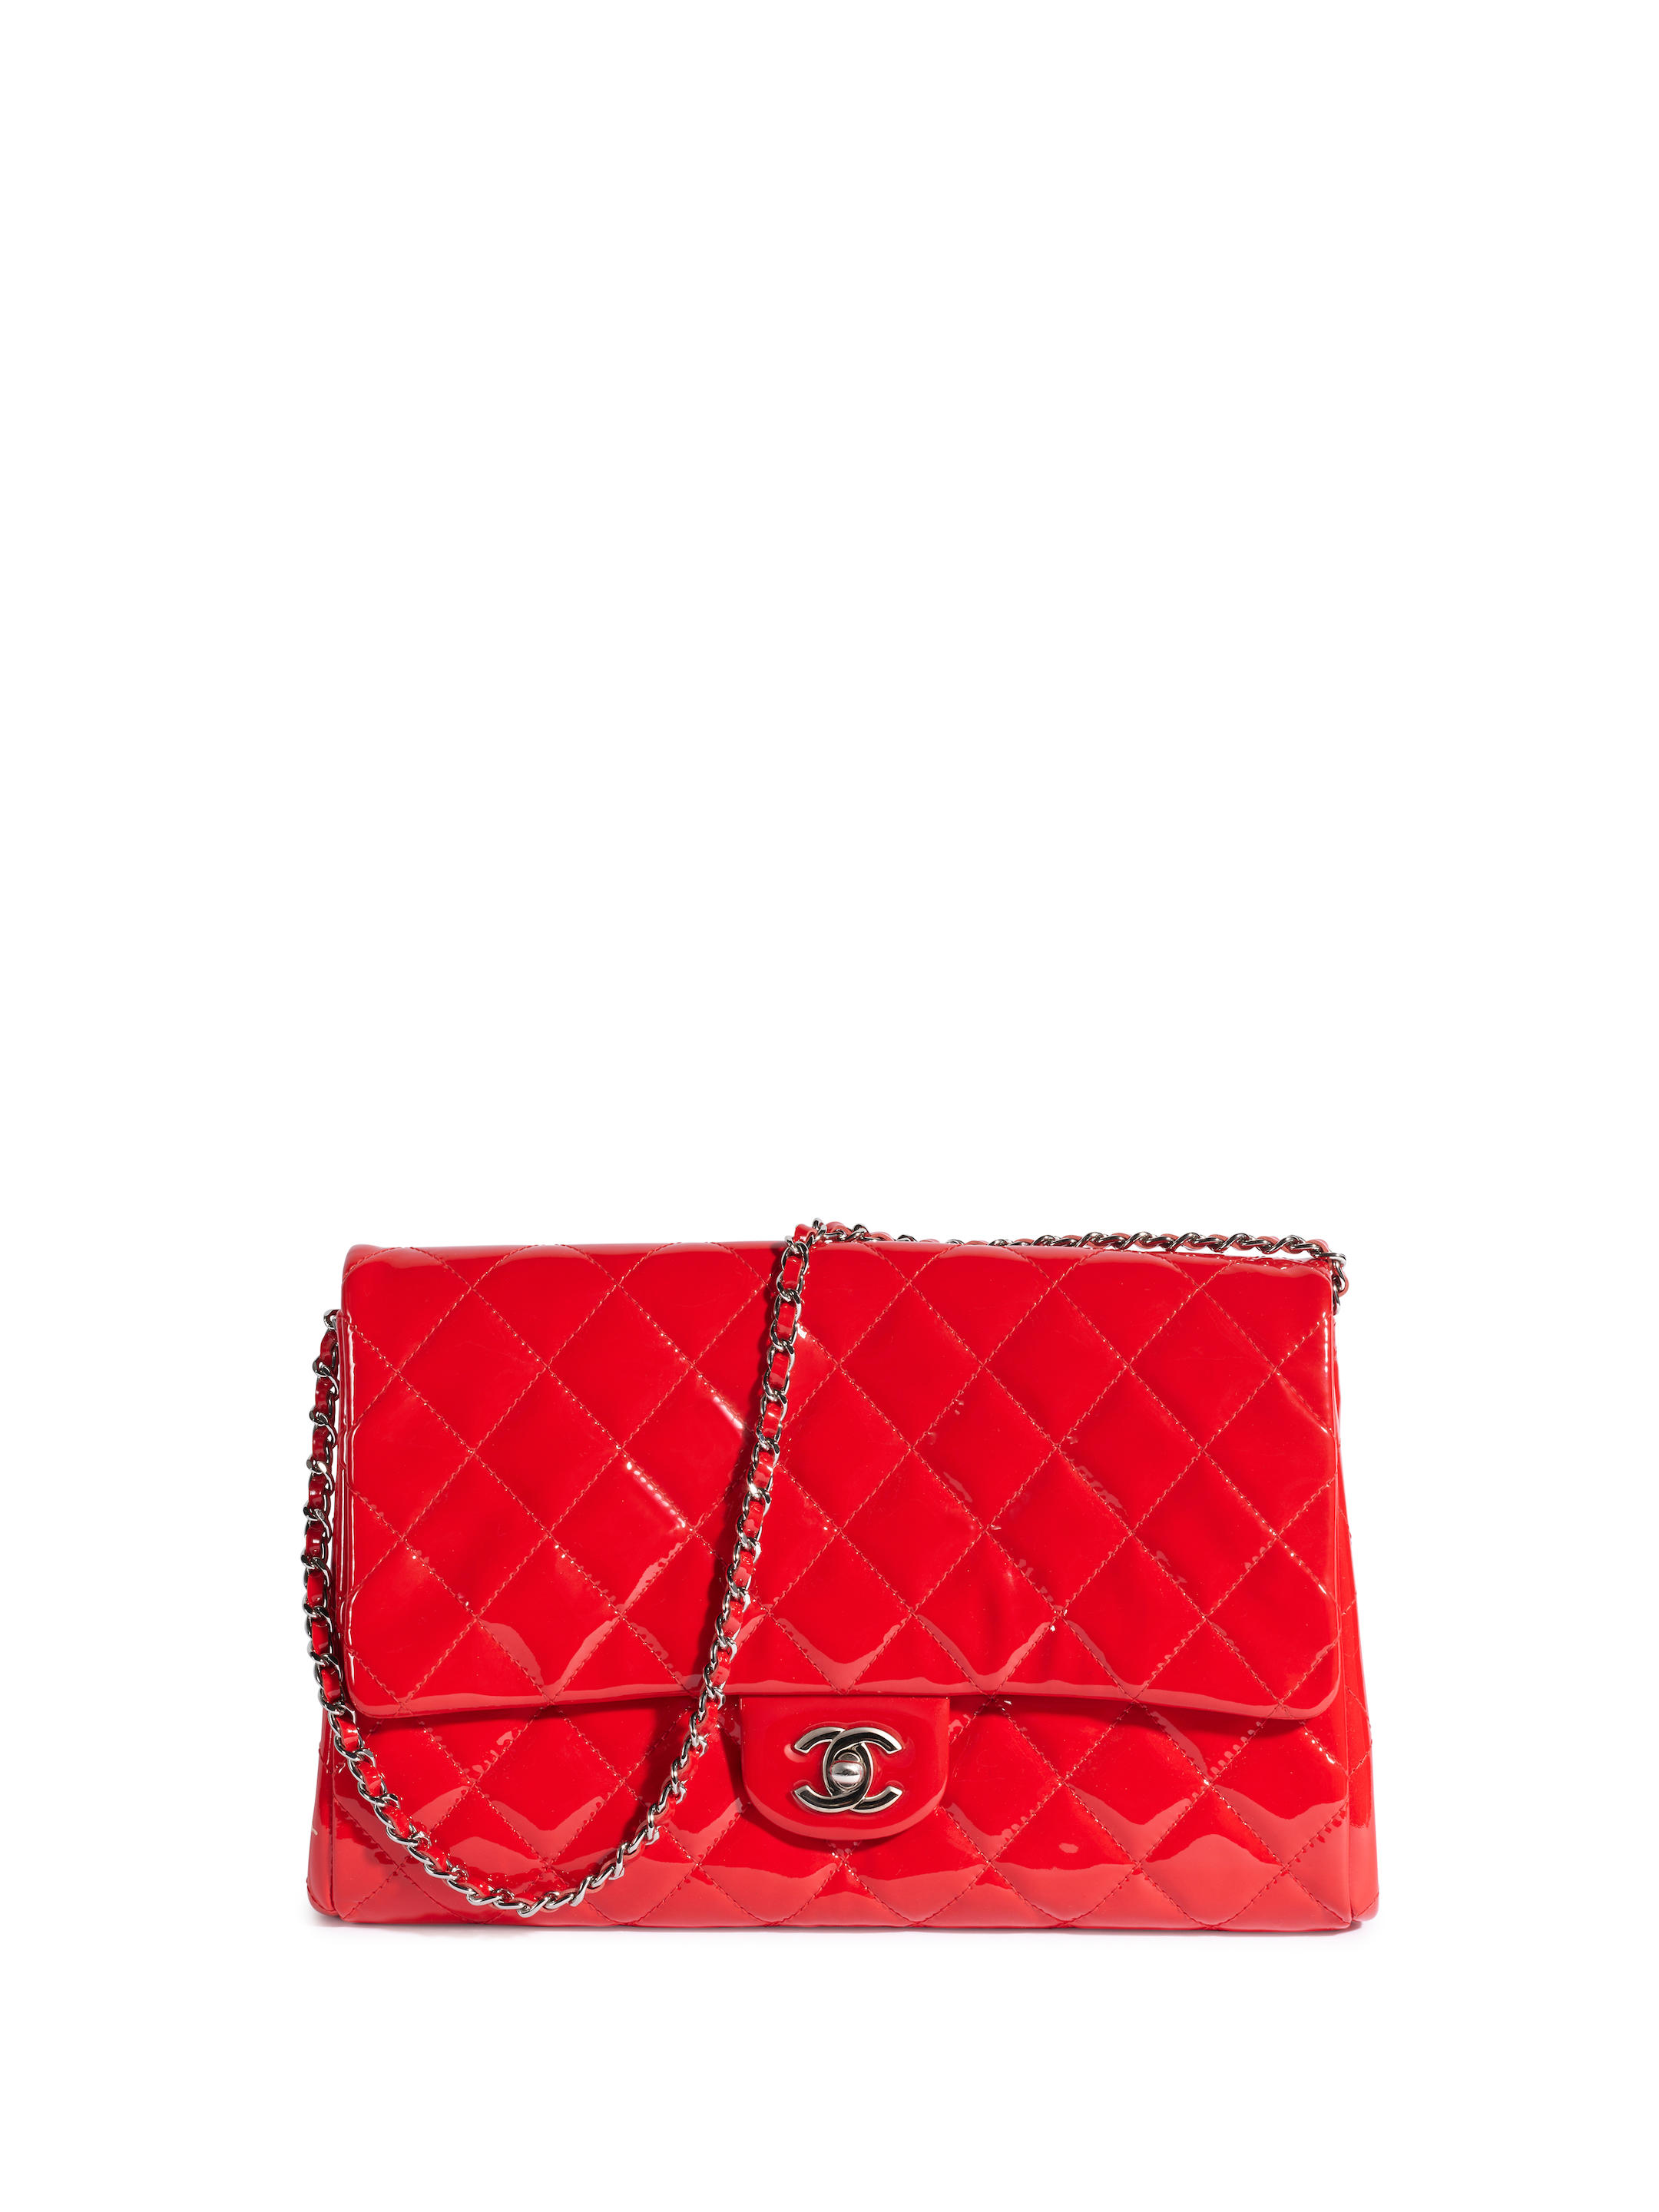 A Chanel Red Satin Strass Shoulder Bag 1986-1988 Auction